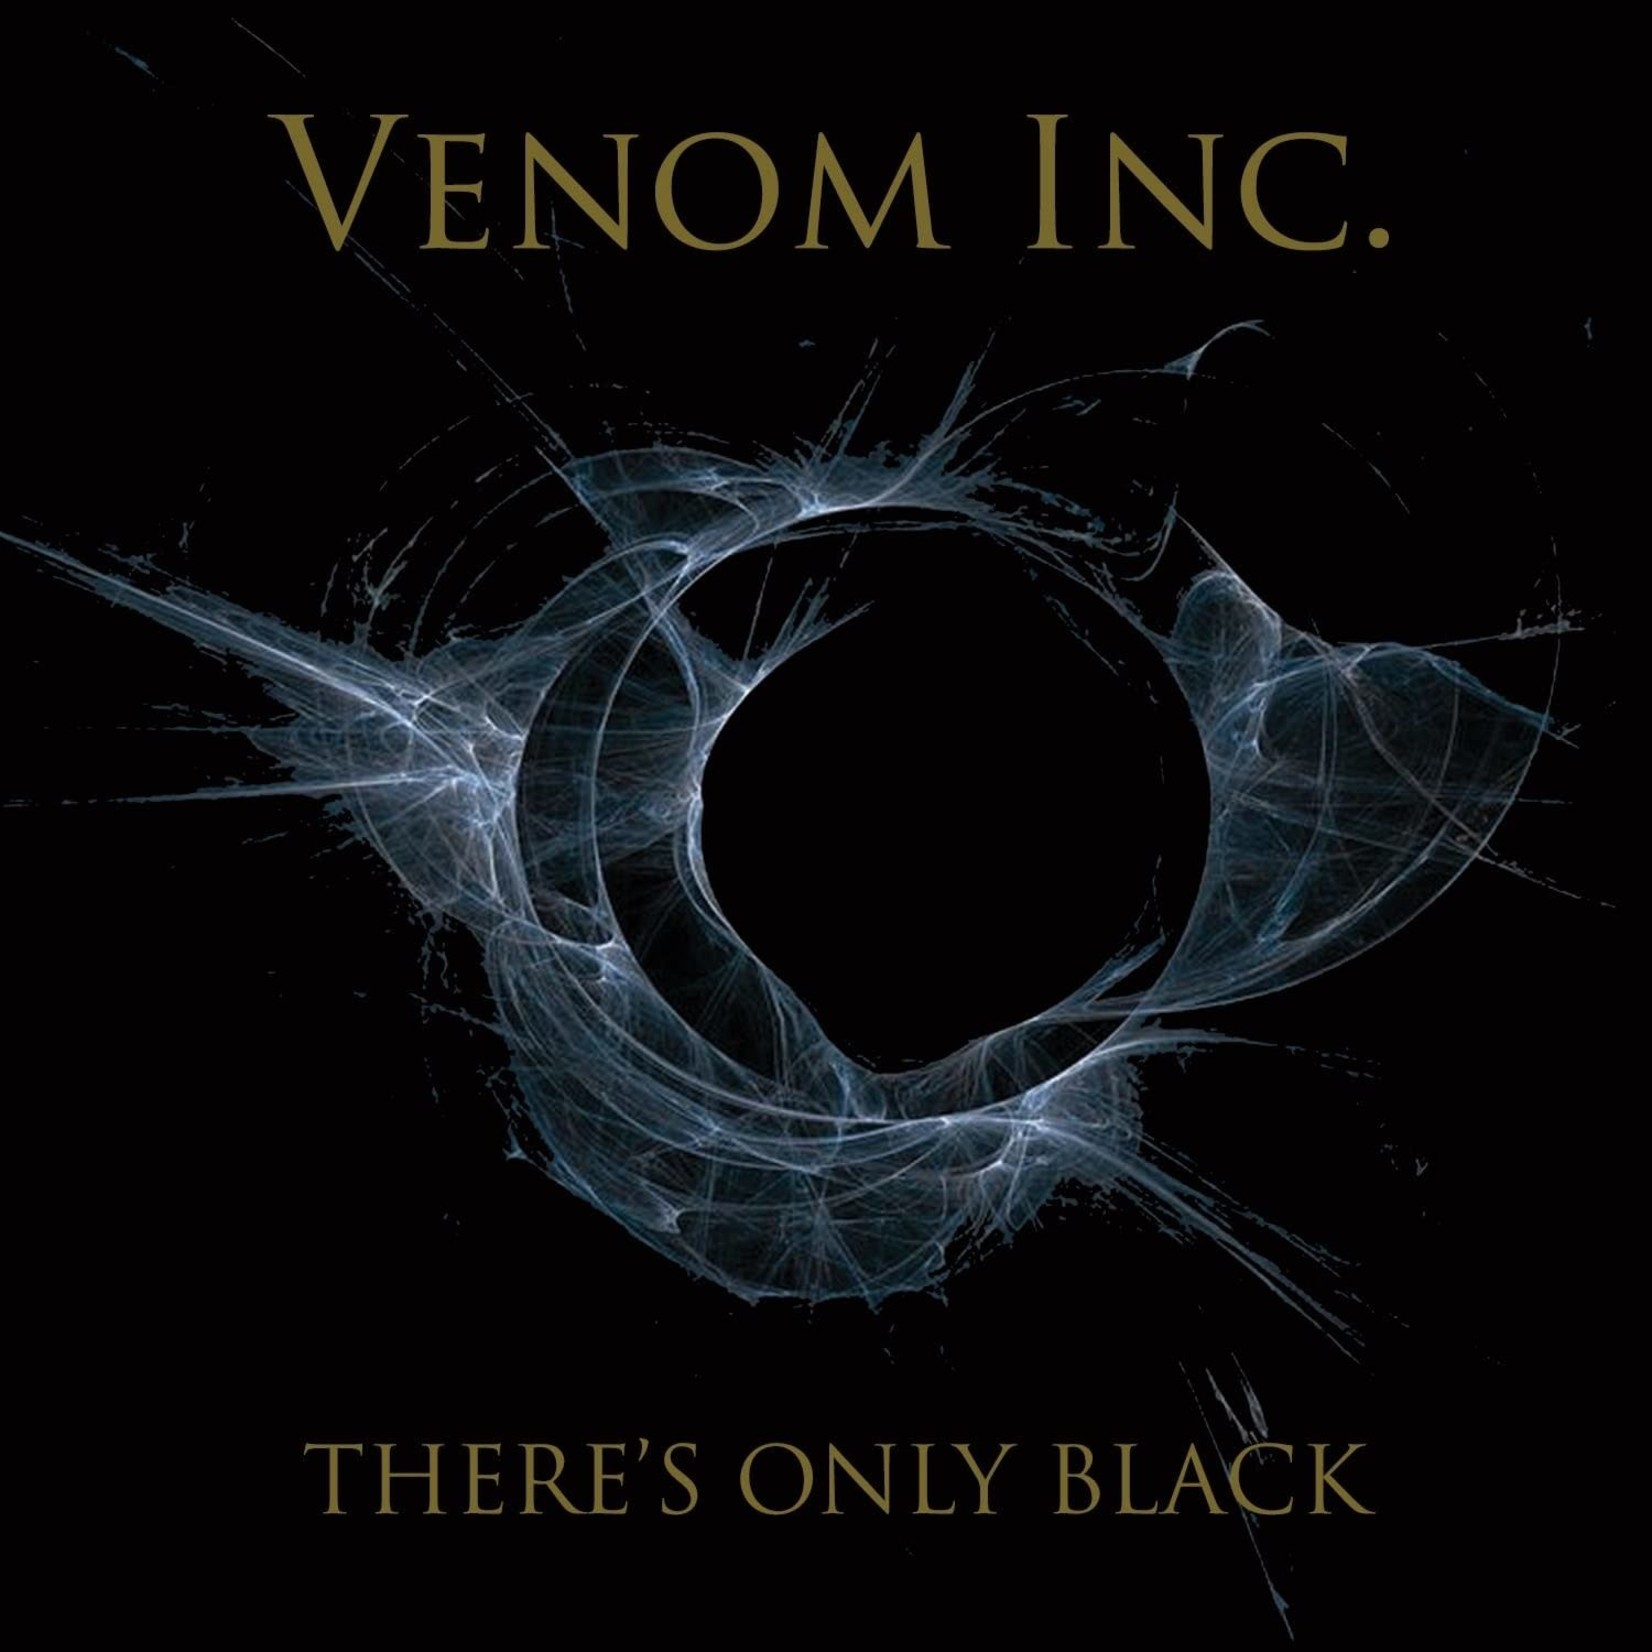 [New] Venom Inc. - There's Only Black (2LP, clear vinyl with black yolk & gold splatter)